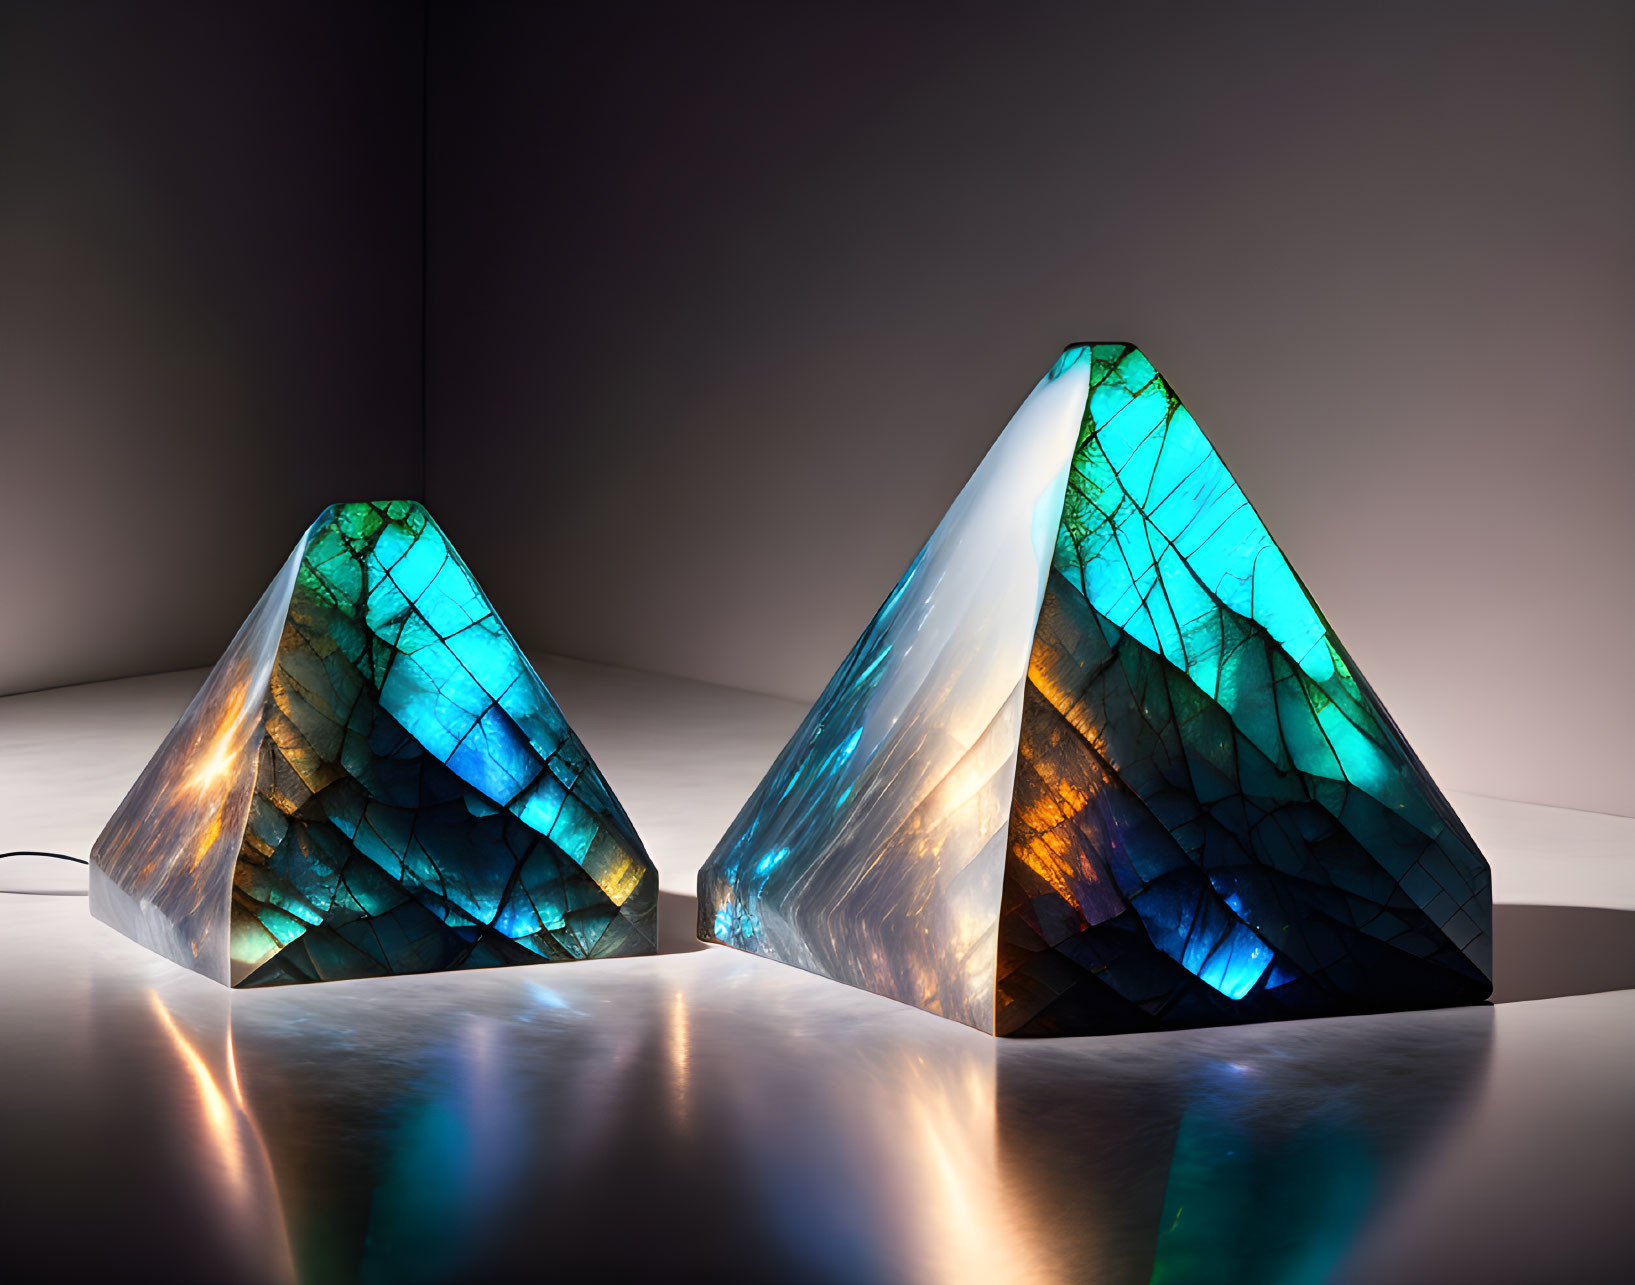 Illuminated triangular art installations with multicolored glass-like surface